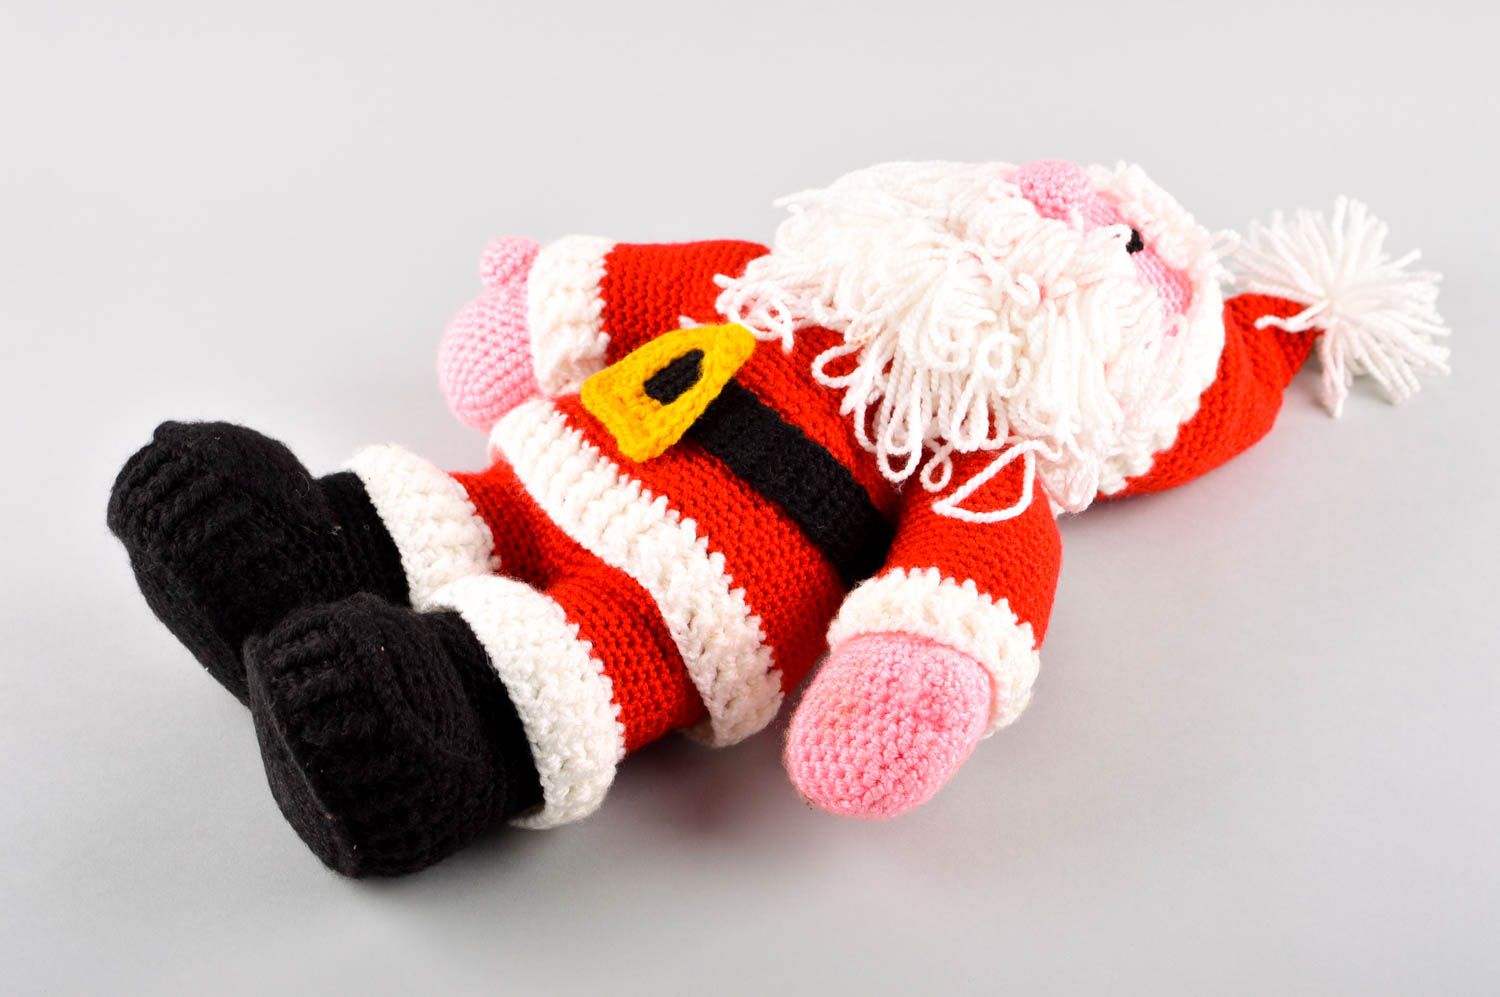 Handmade toy stuffed toy crocheted toy for babies soft nursery decor photo 3